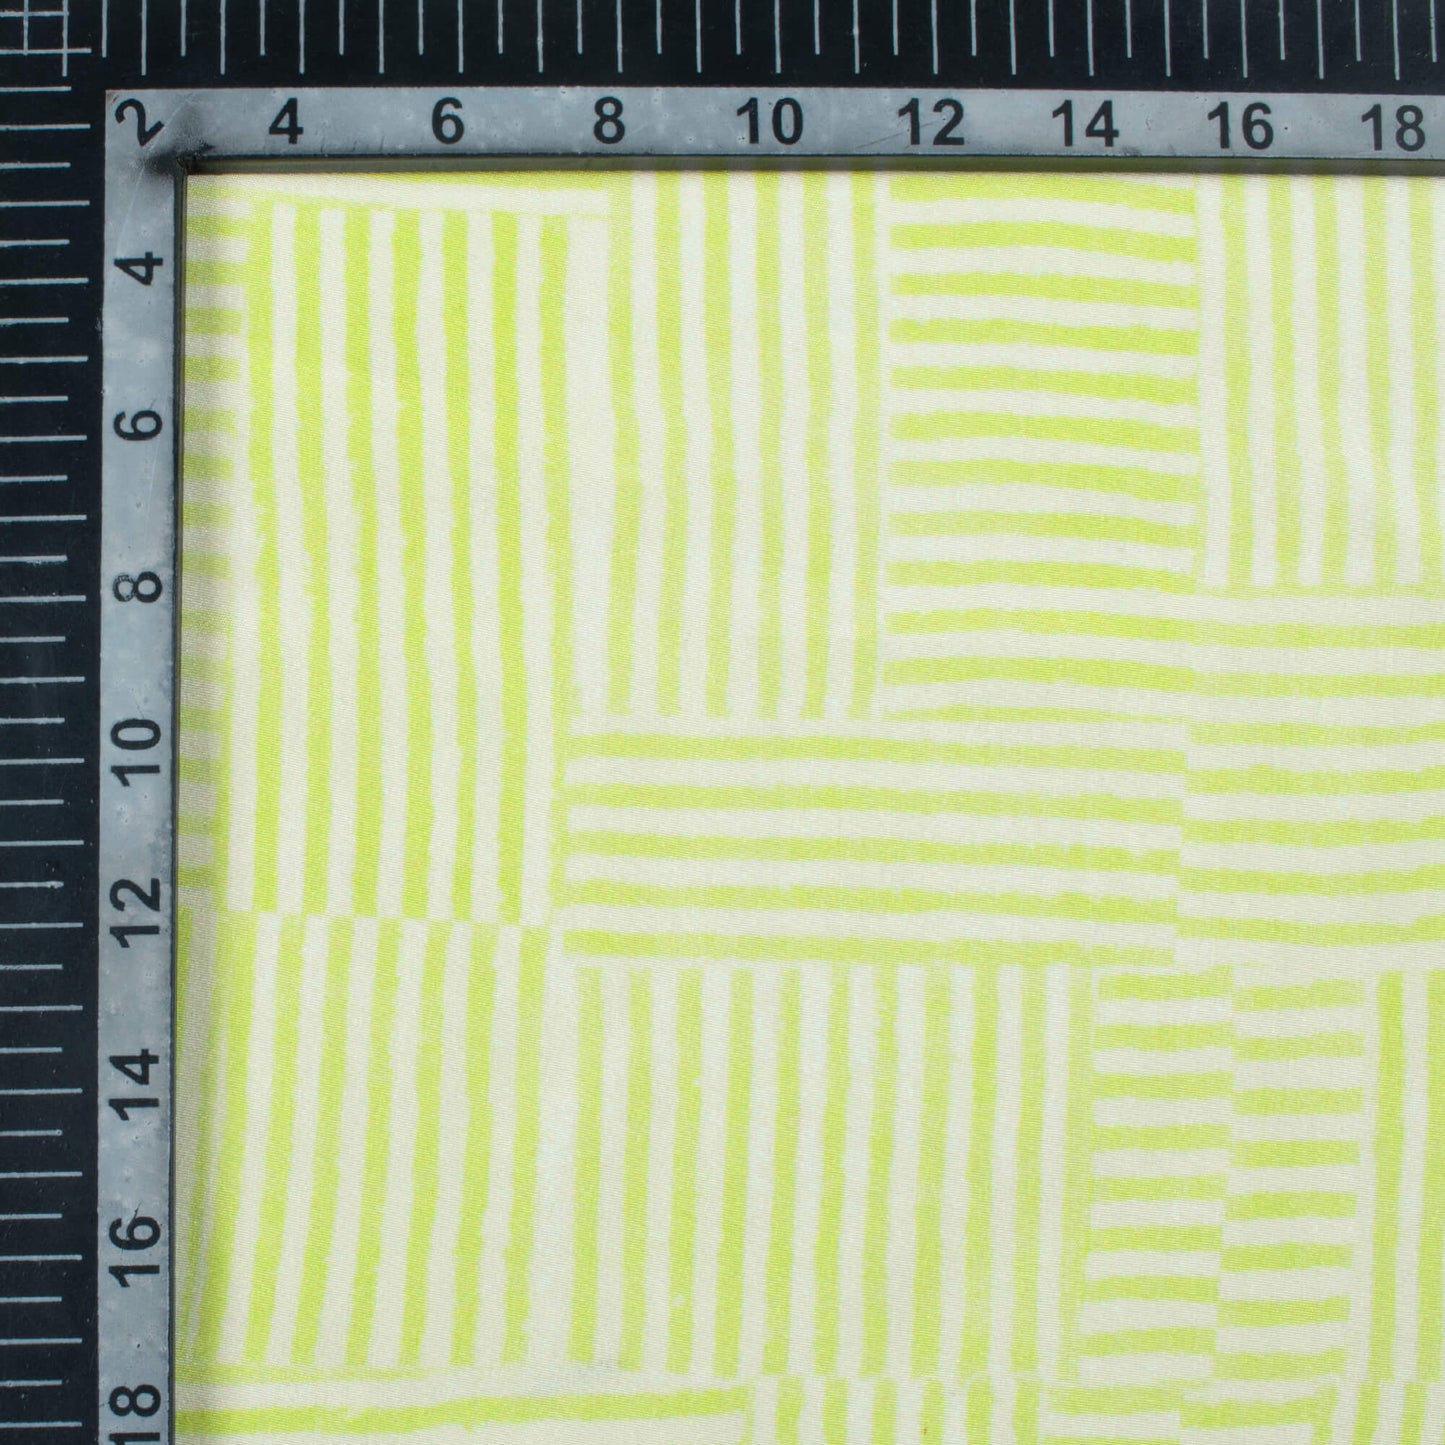 Pear Green And White Stripes Pattern Digital Print Crepe Silk Fabric